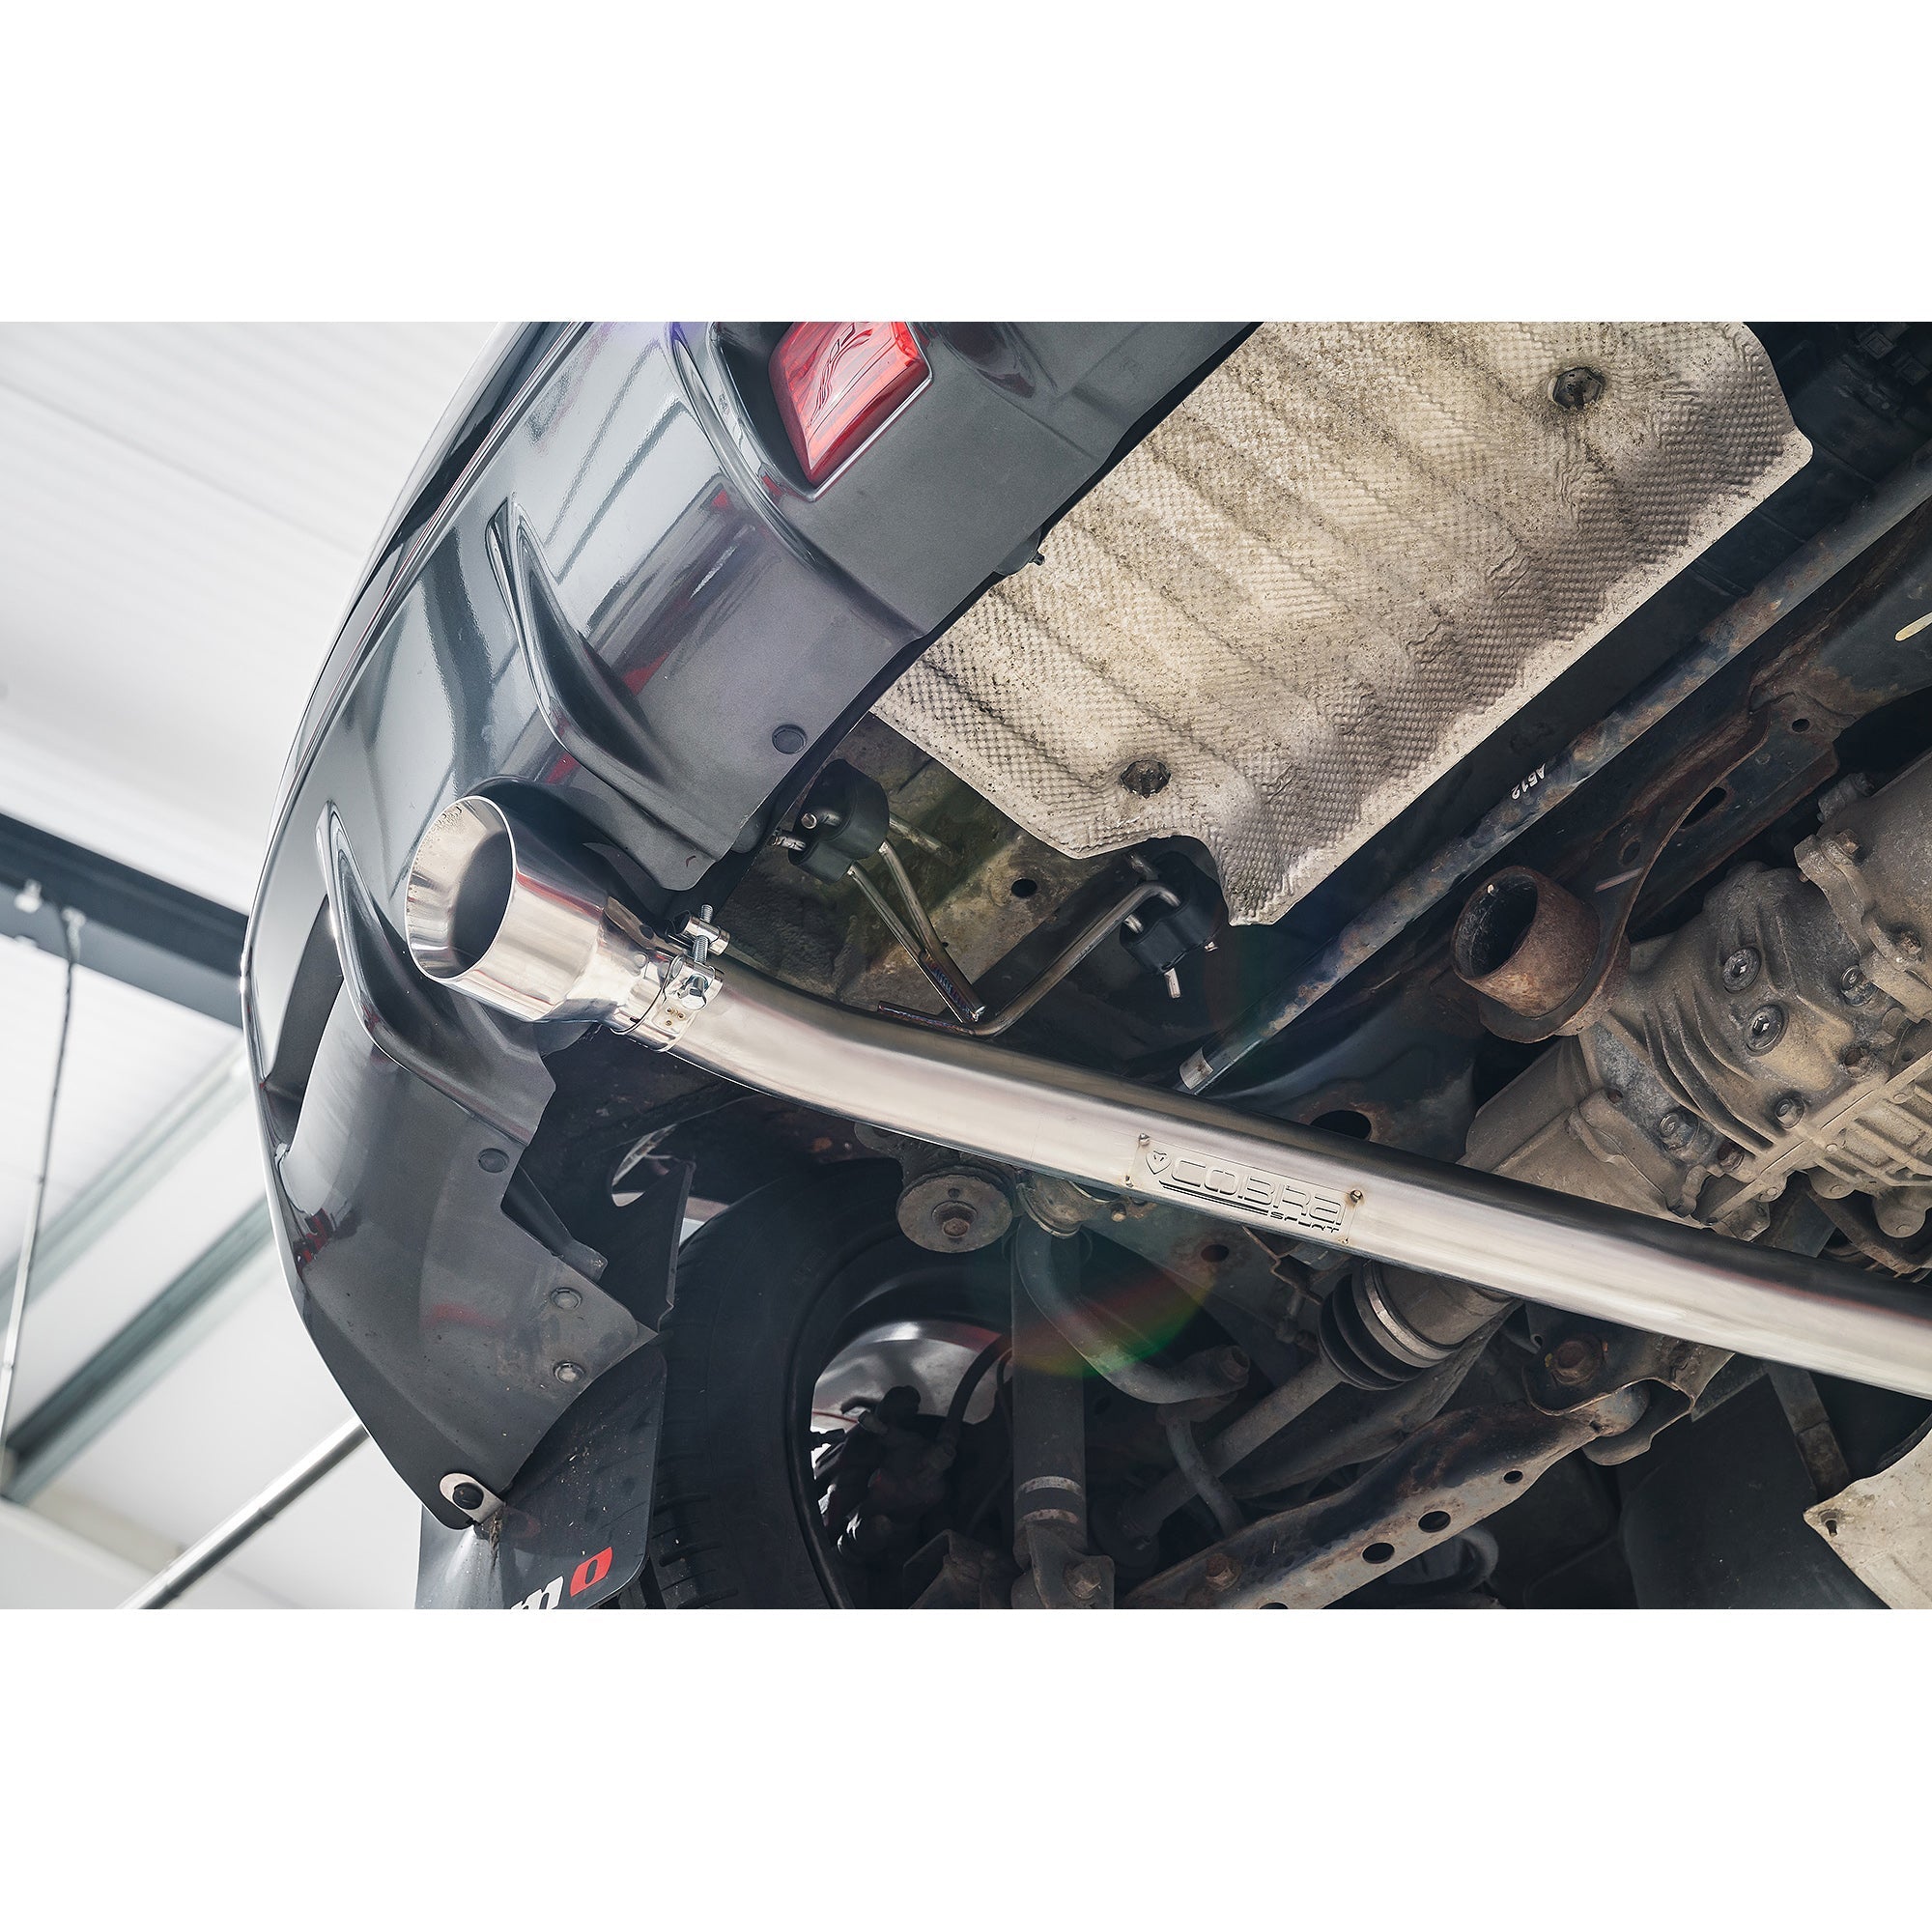 Nissan Juke NISMO 4x4 CVT Secondary Venom Cat Back Performance Exhaust - Wayside Performance 